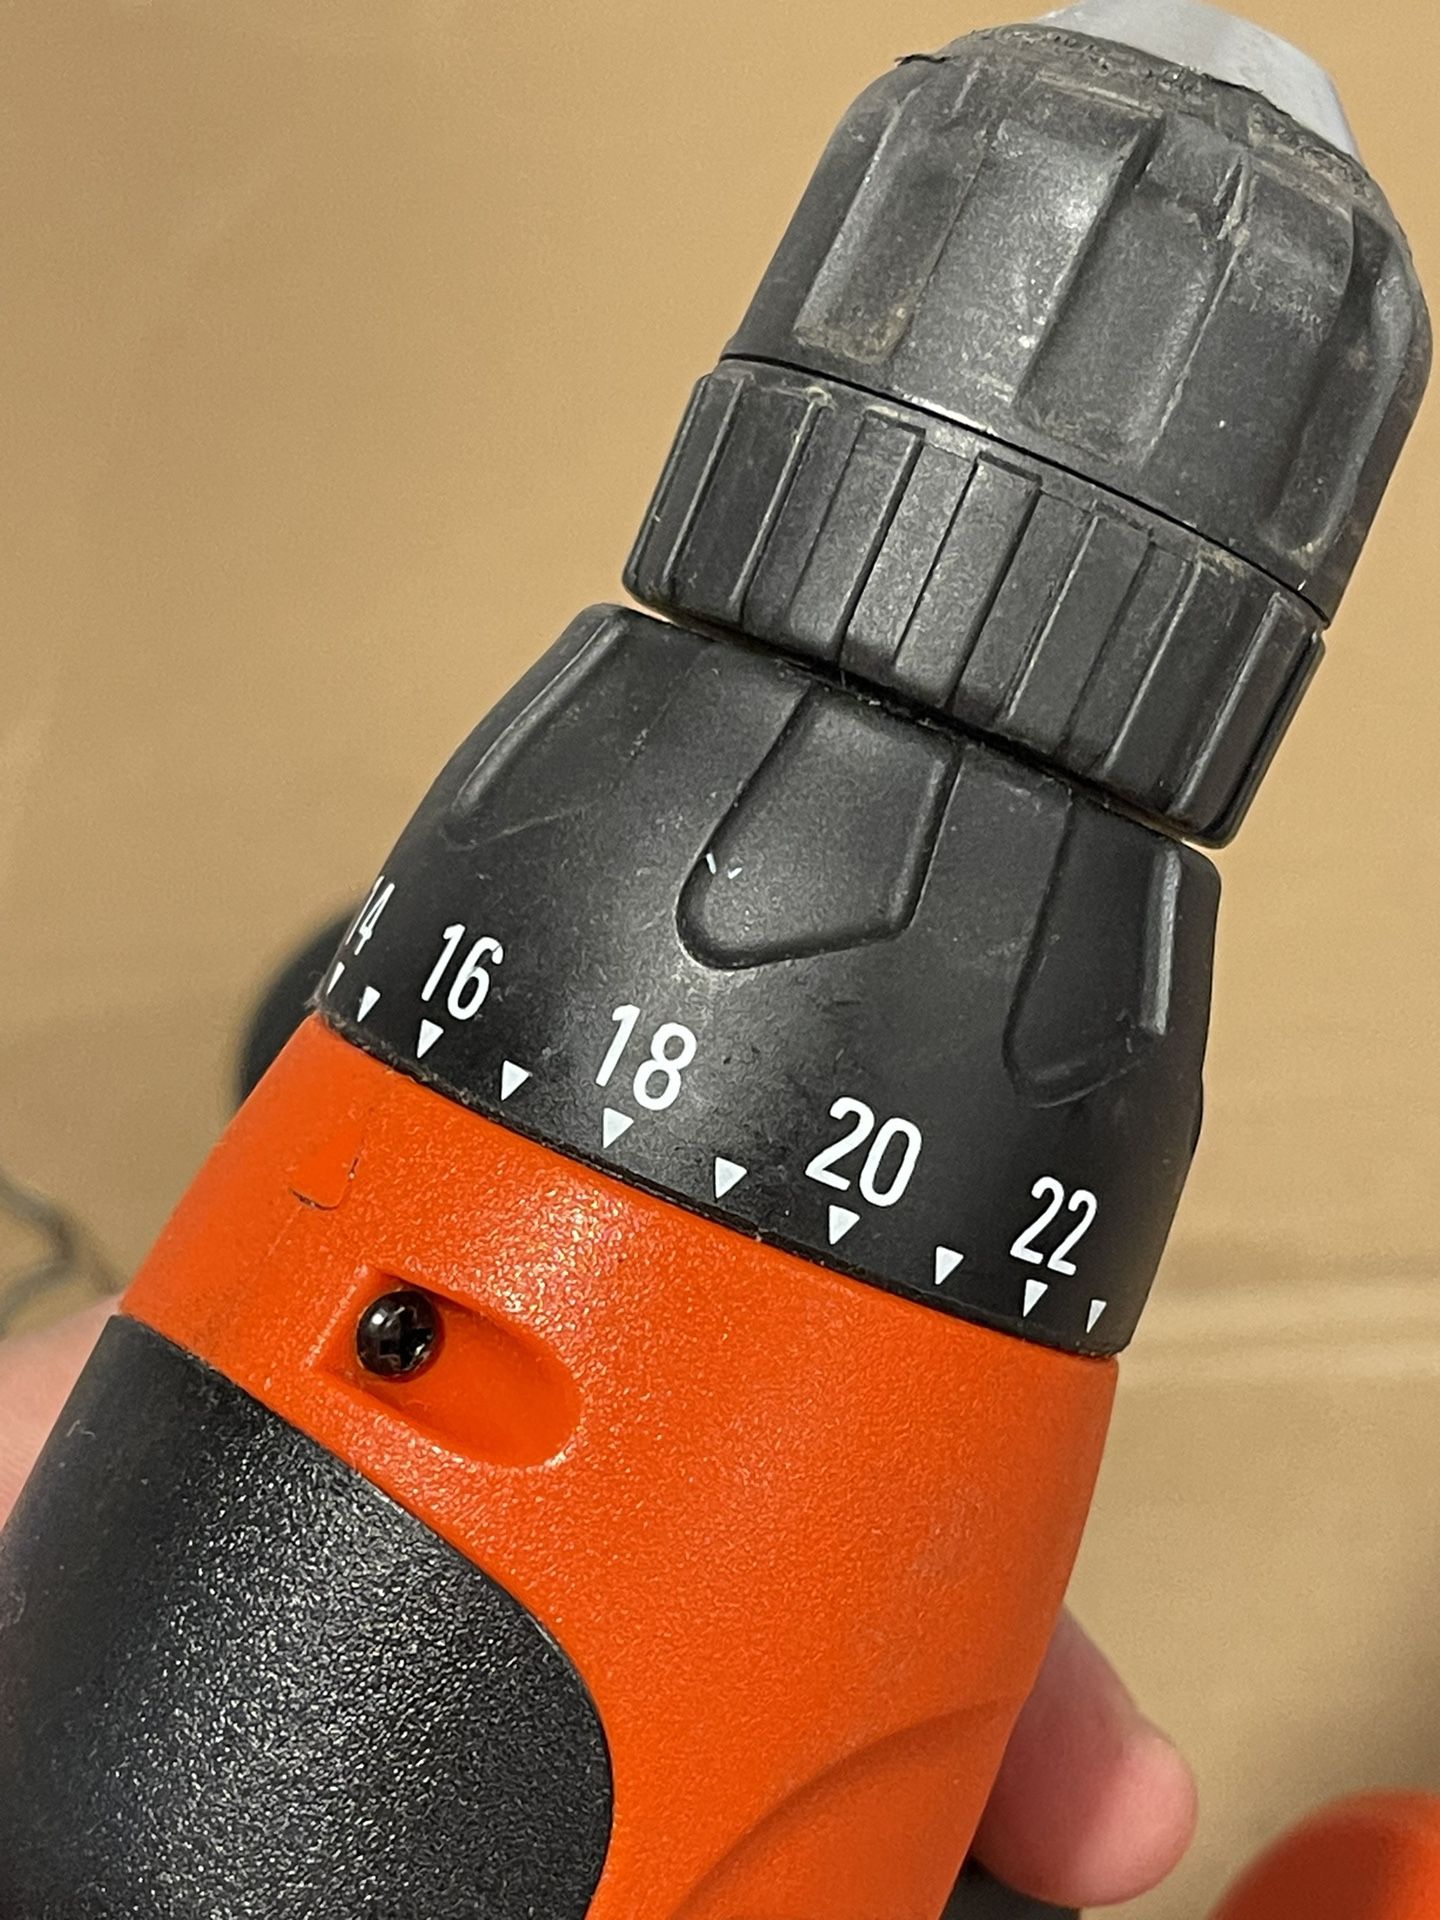 Black+Decker Drill Bits Set for Sale in Port St. Lucie, FL - OfferUp